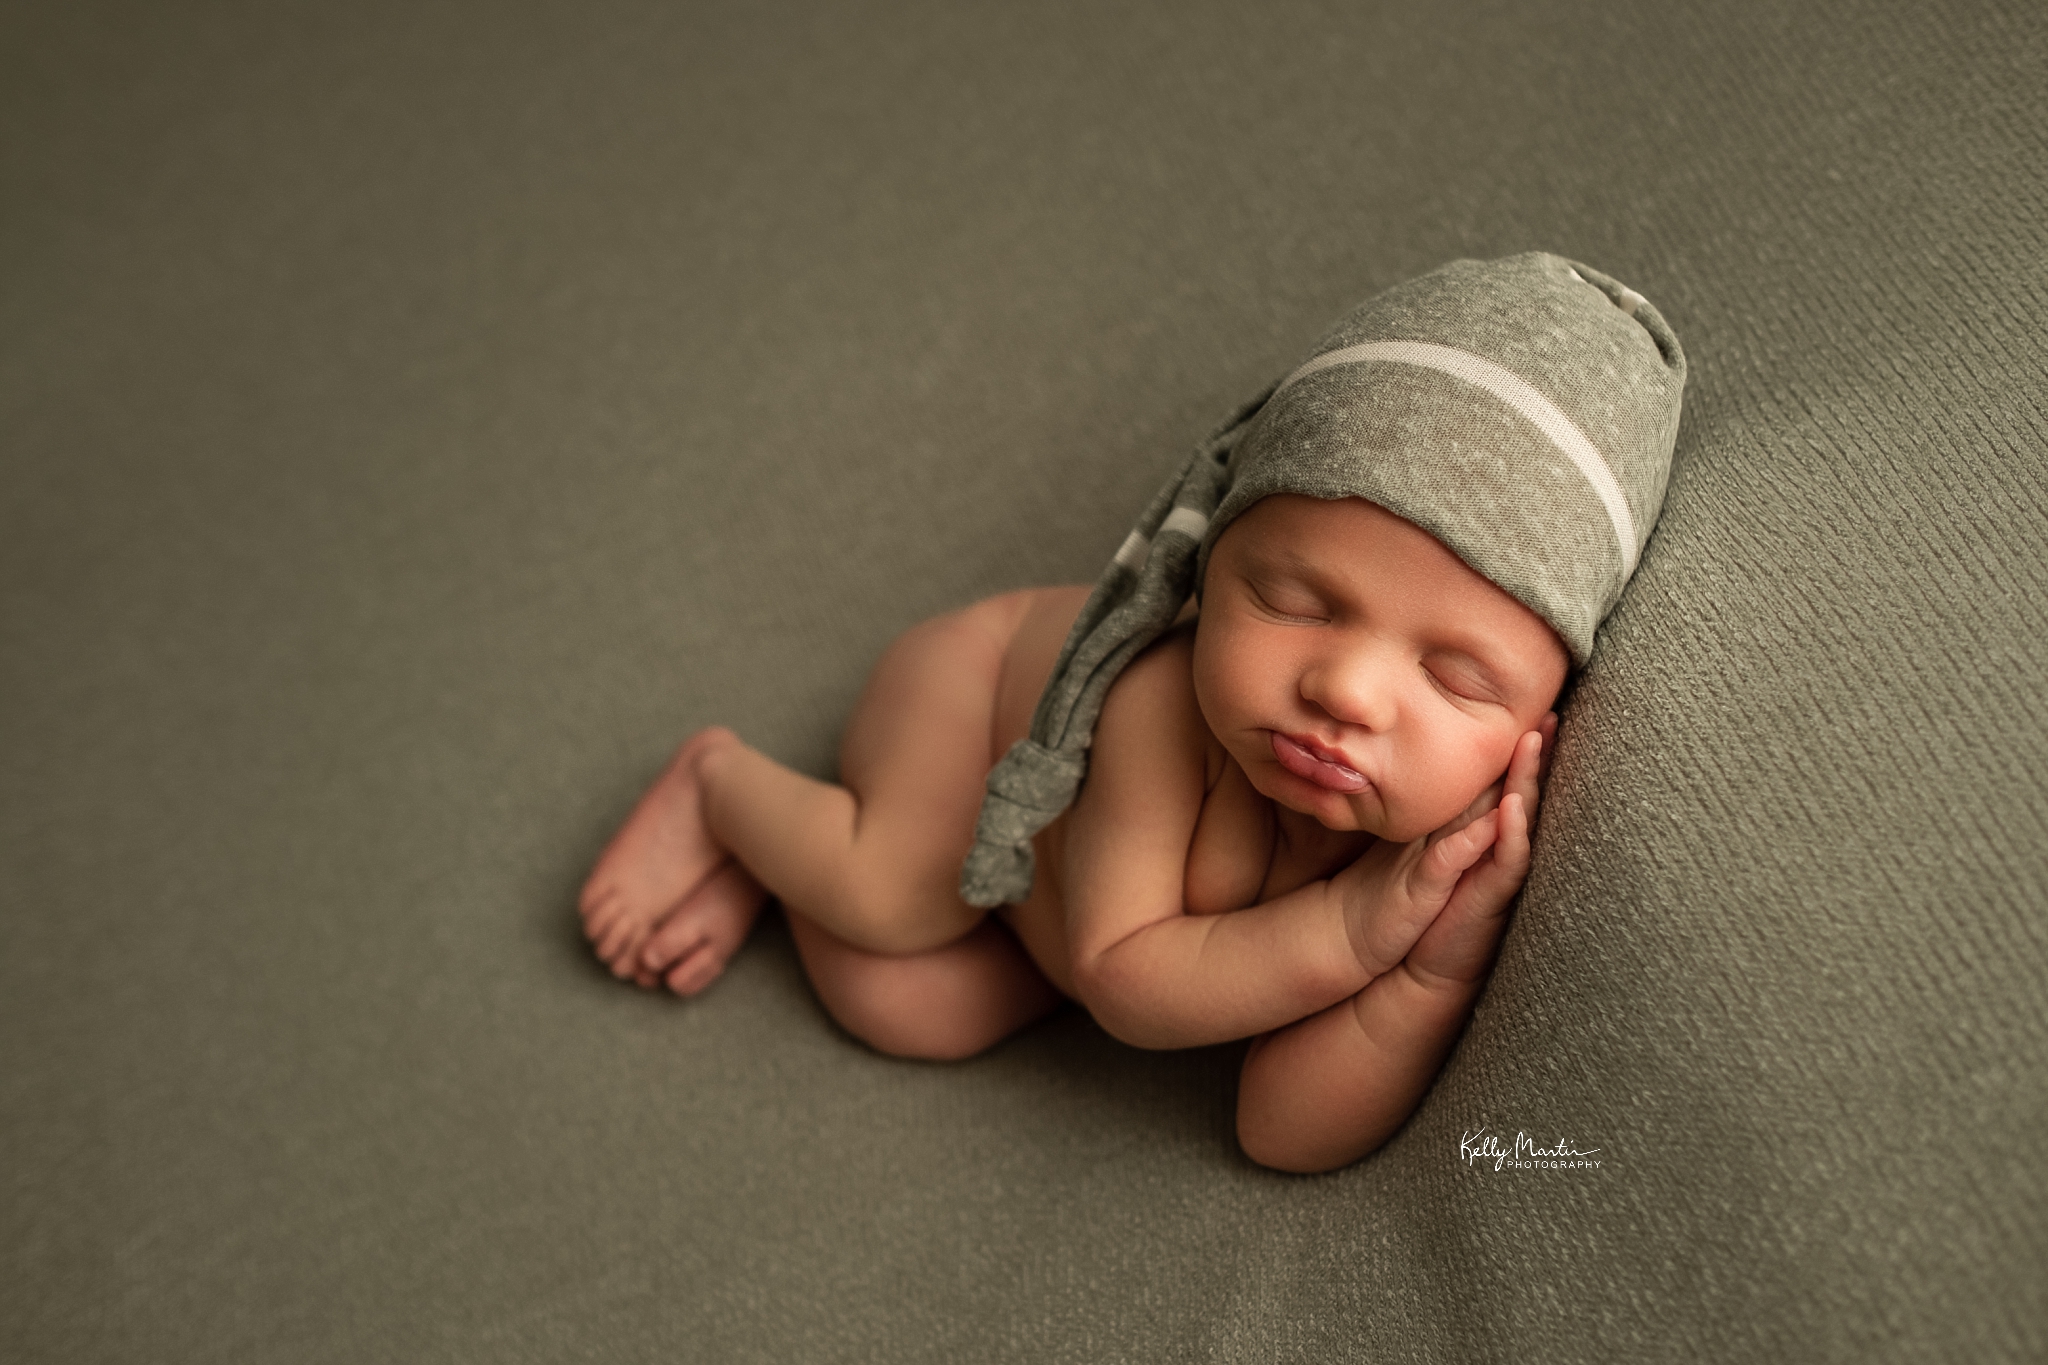 Newborn portrait shot by Kelly Martin Photography